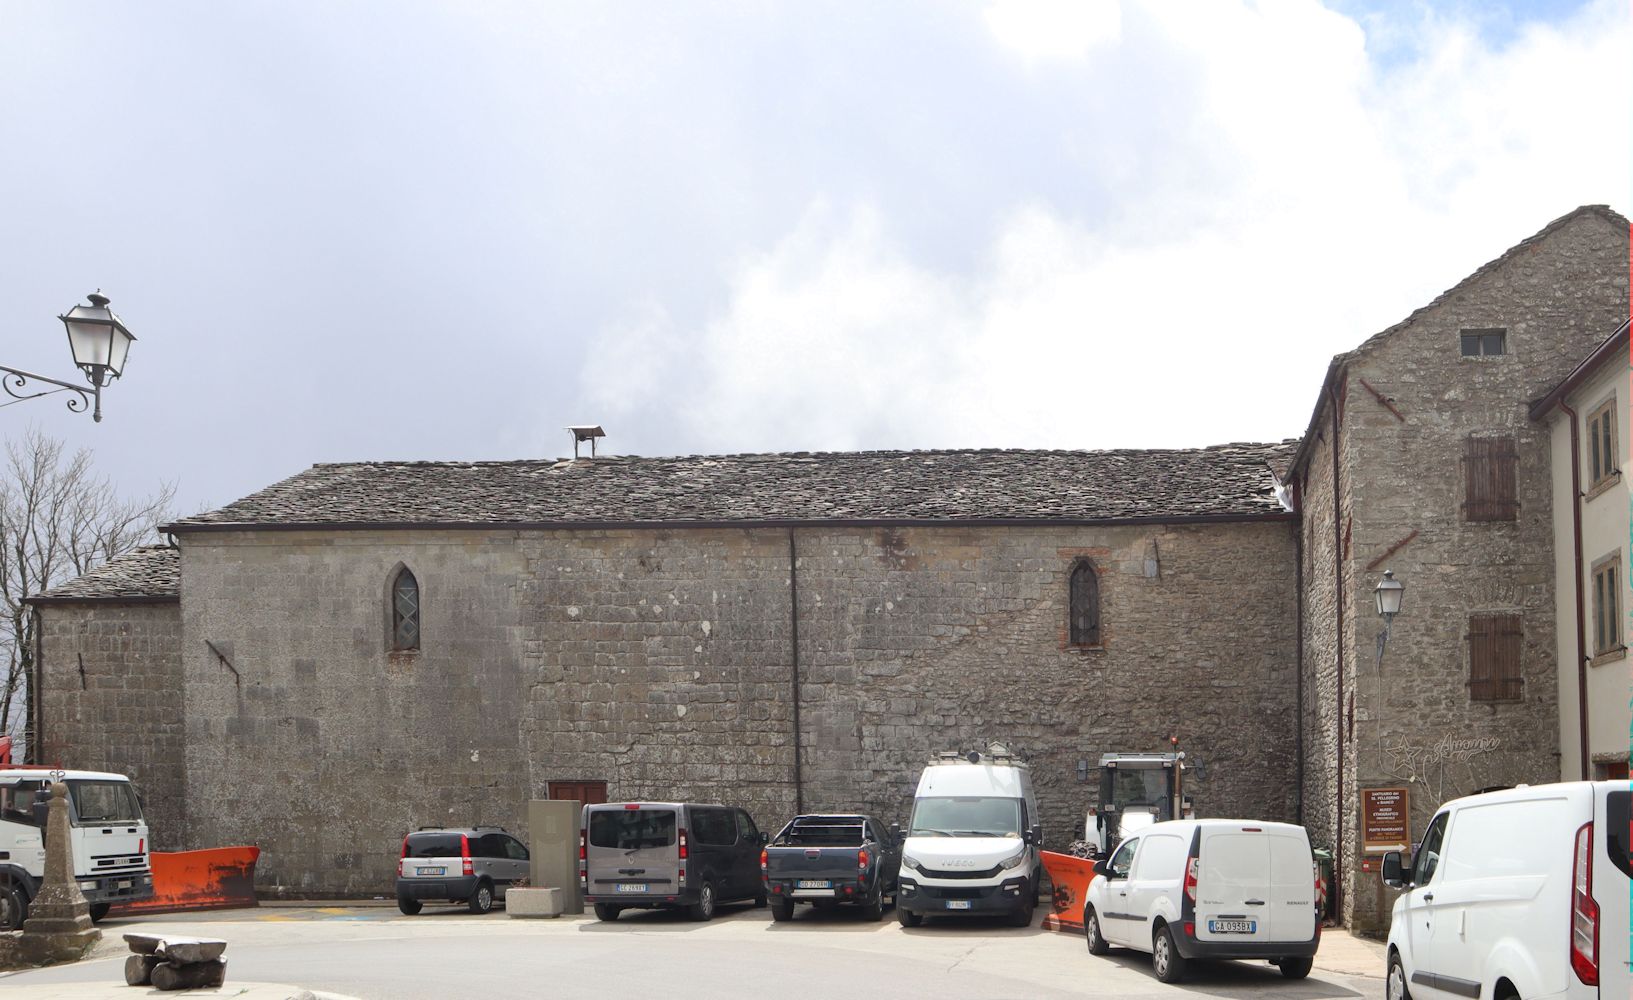 Sanktuarium in San Pellegrino in Alpe